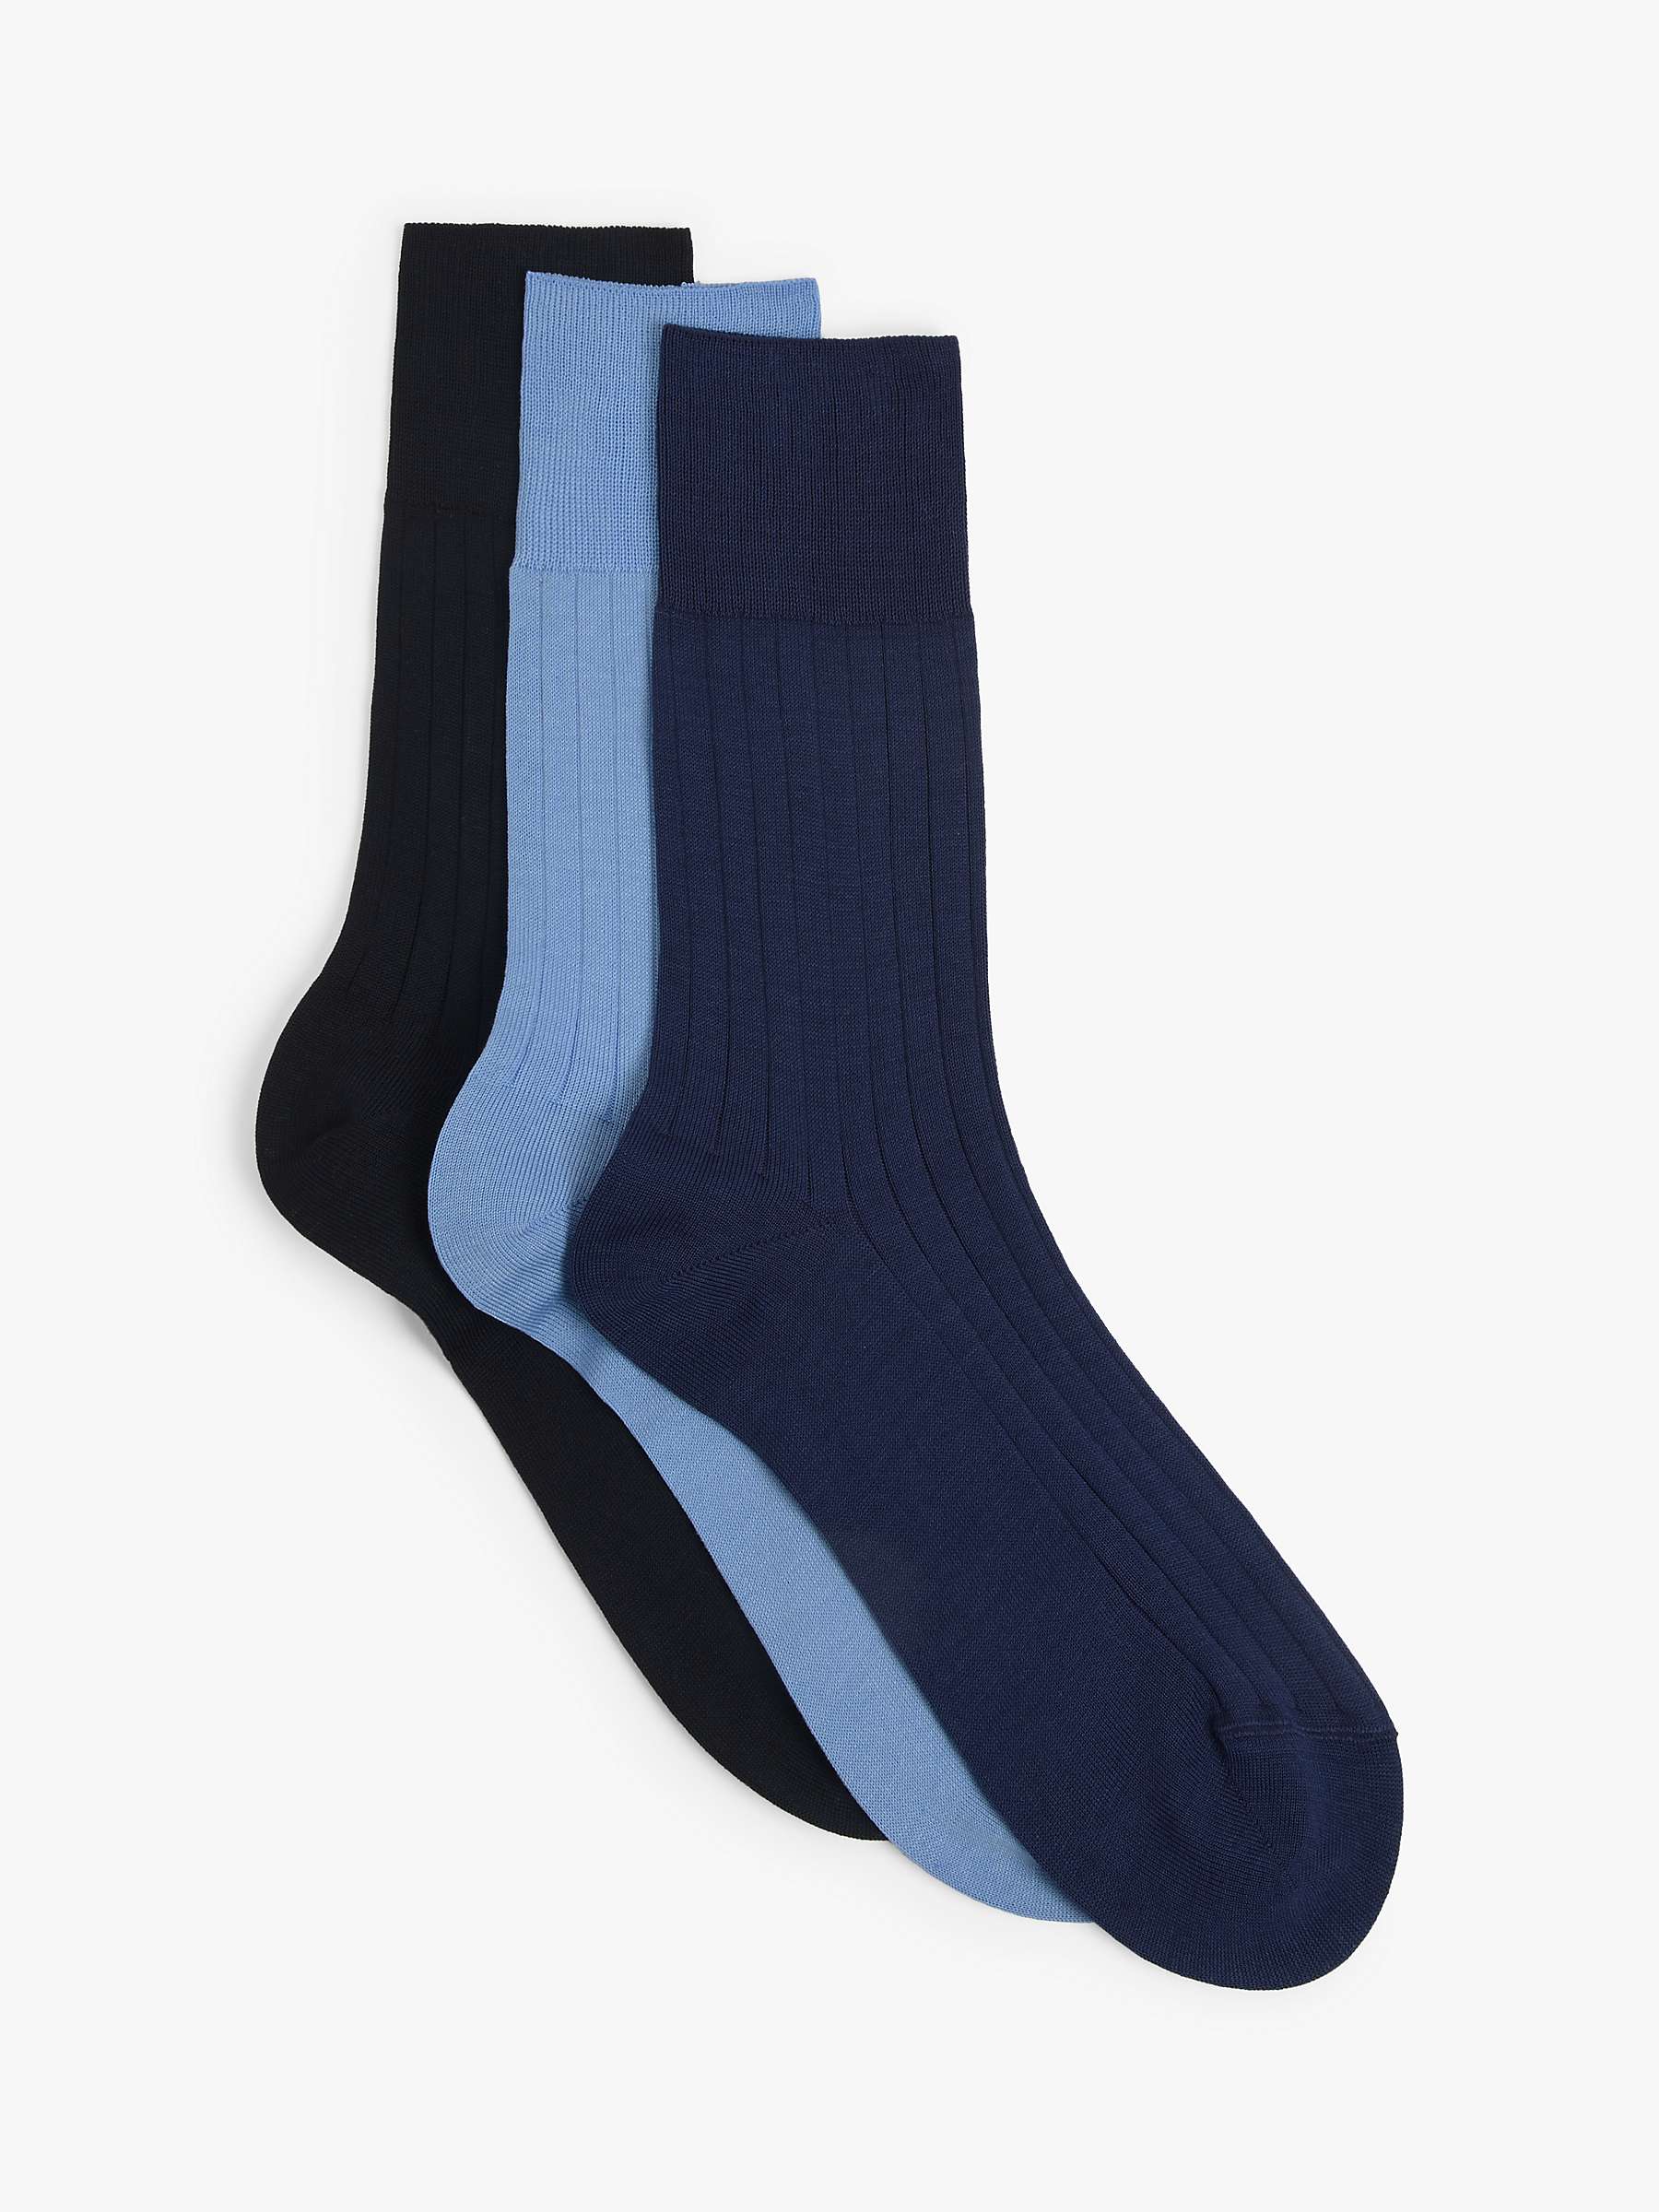 Buy John Lewis Made in Italy Mercerised Cotton Socks, Pack of 3, Blues Online at johnlewis.com